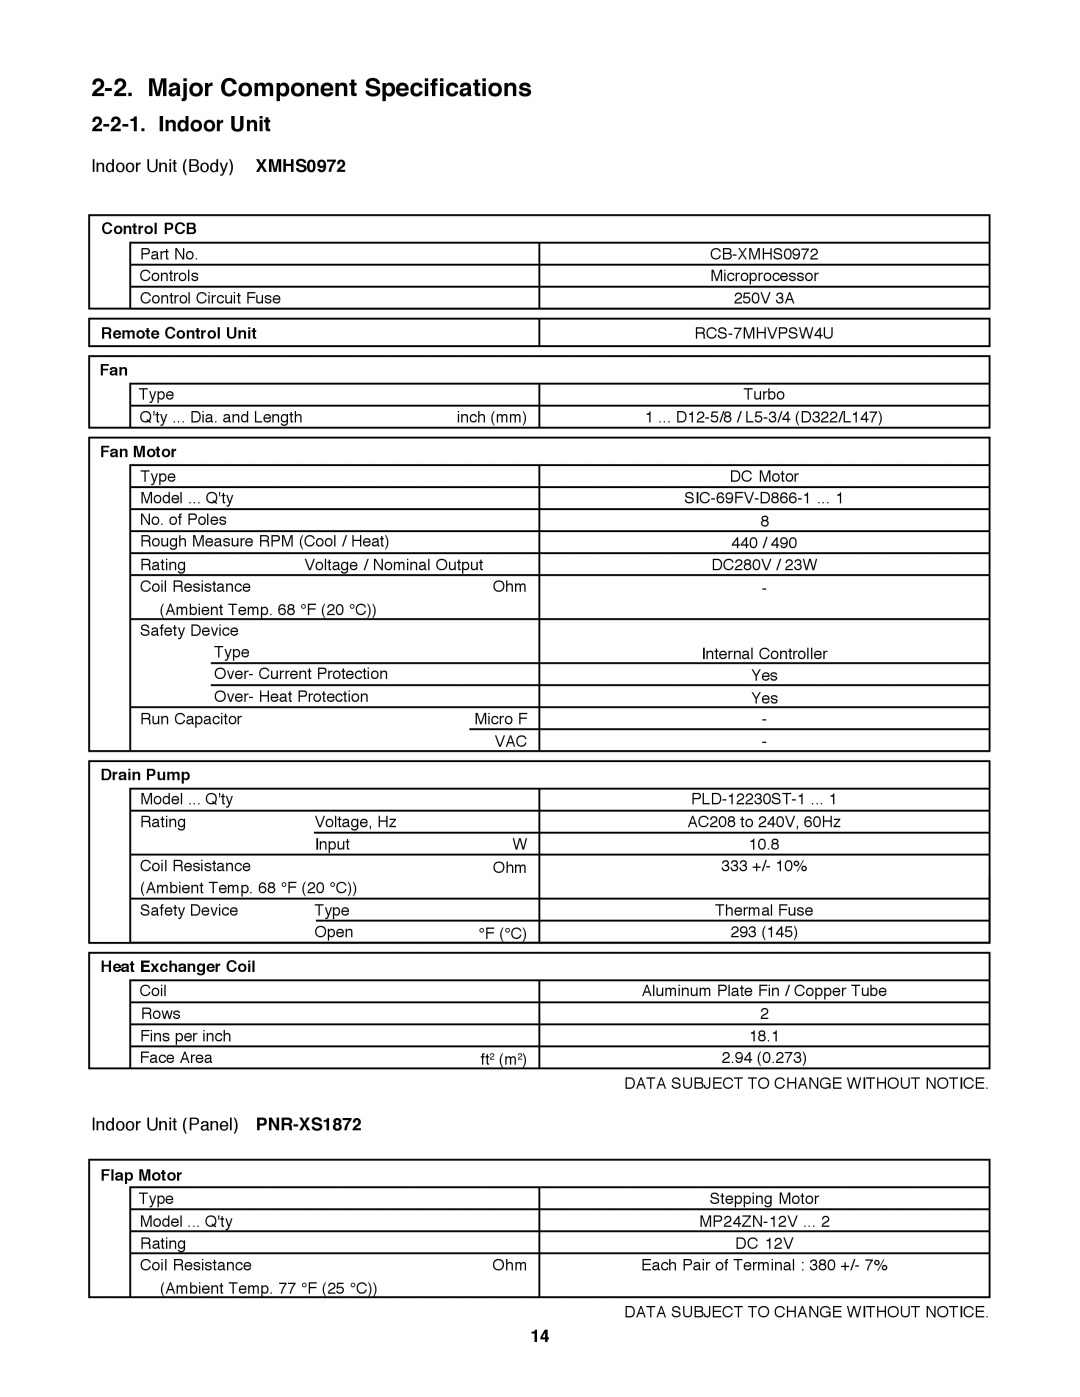 Sanyo XMHS0972 Major Component Specifications, Indoor Unit, PNR-XS1872, Control PCB, Remote Control Unit Fan, Fan Motor 